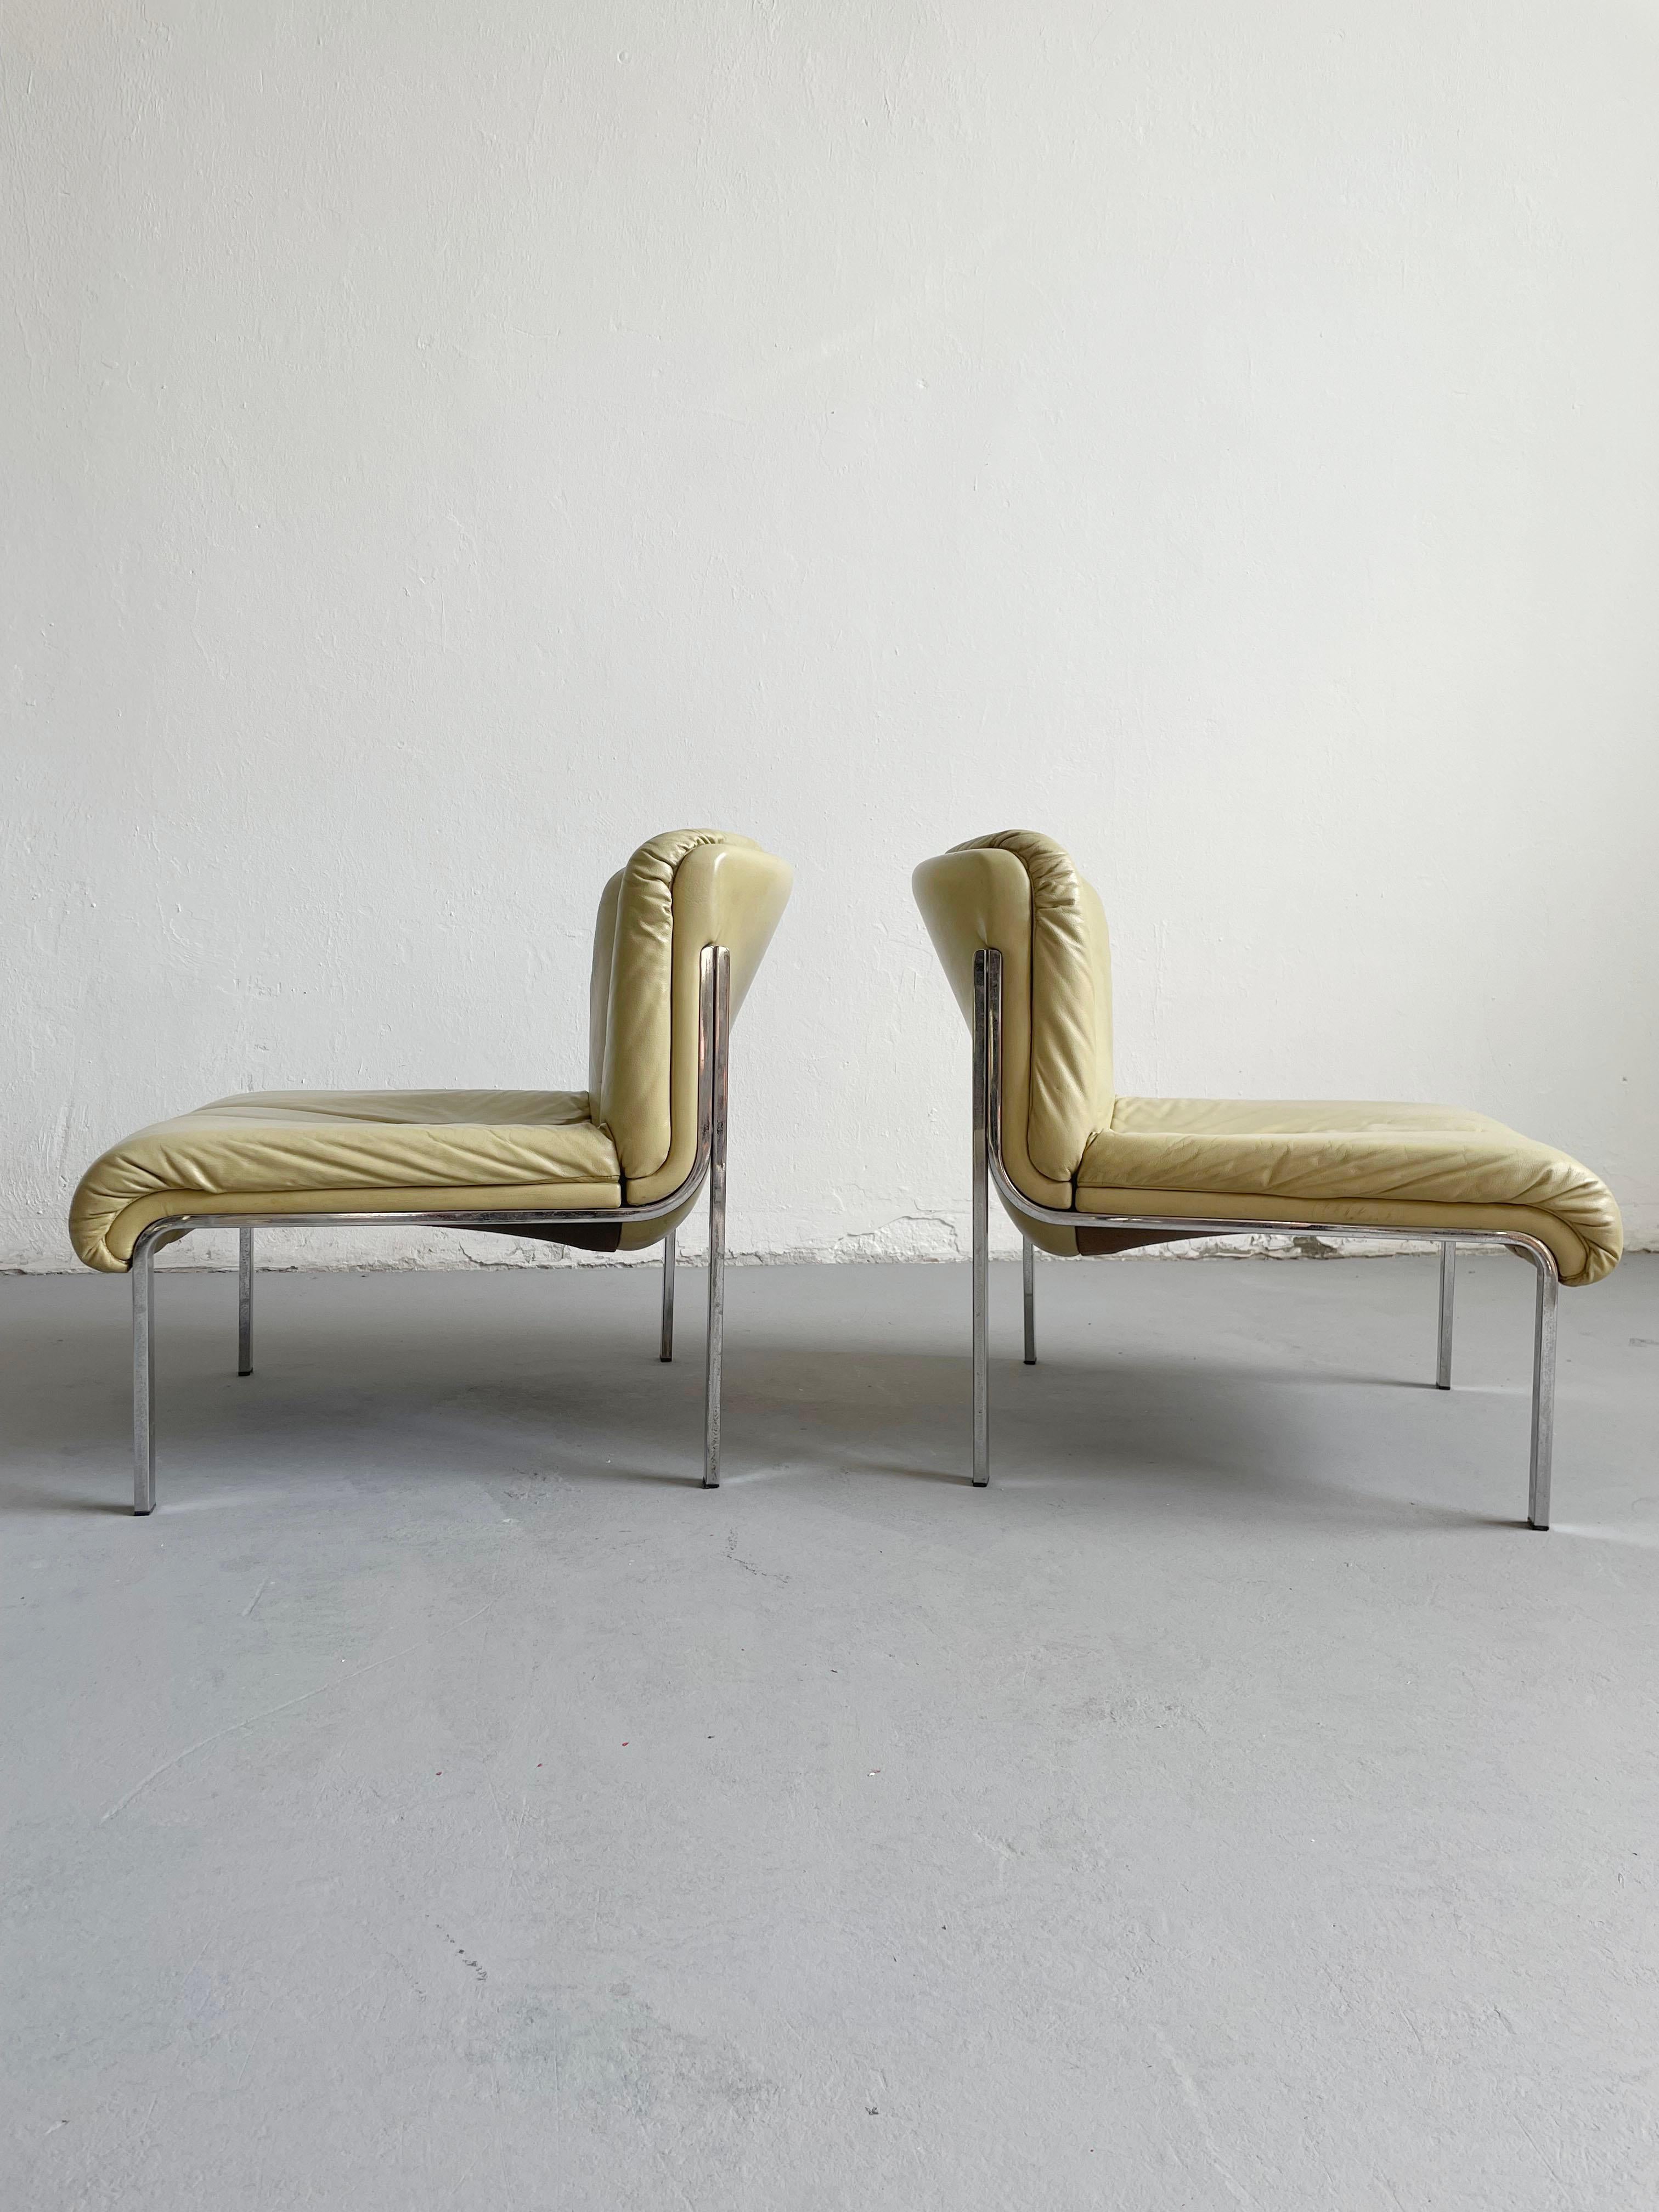 Late 20th Century Hans Eichenberger Lounge Chair Model 1200 for Girsberger Eurochair, Set of 2